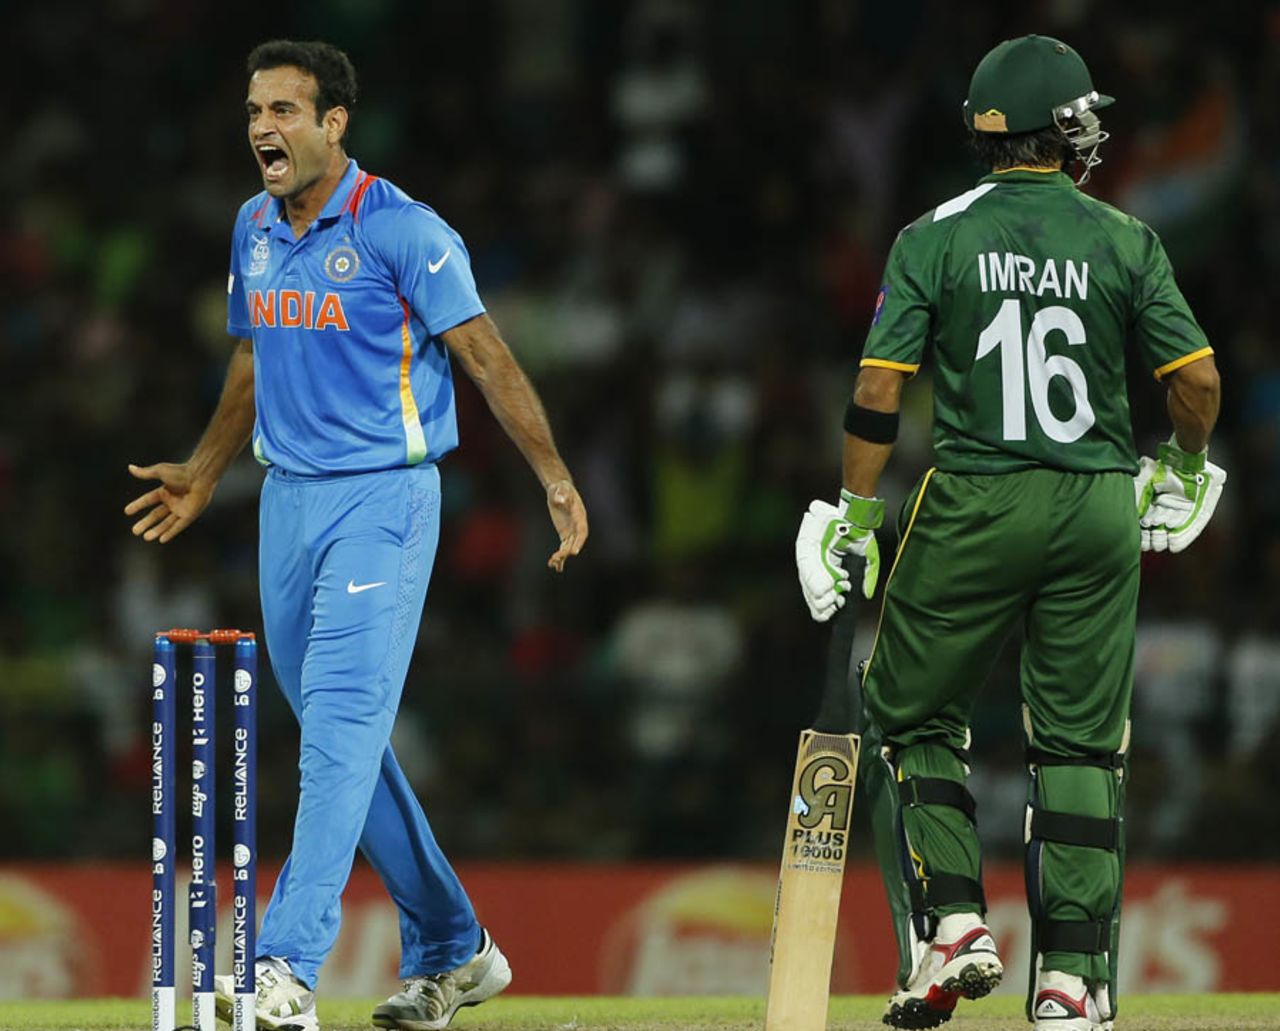 Irfan Pathan reacts after dismissing Imran Nazir, India v Pakistan, Super Eights, World Twenty20, Colombo, September 30, 2012